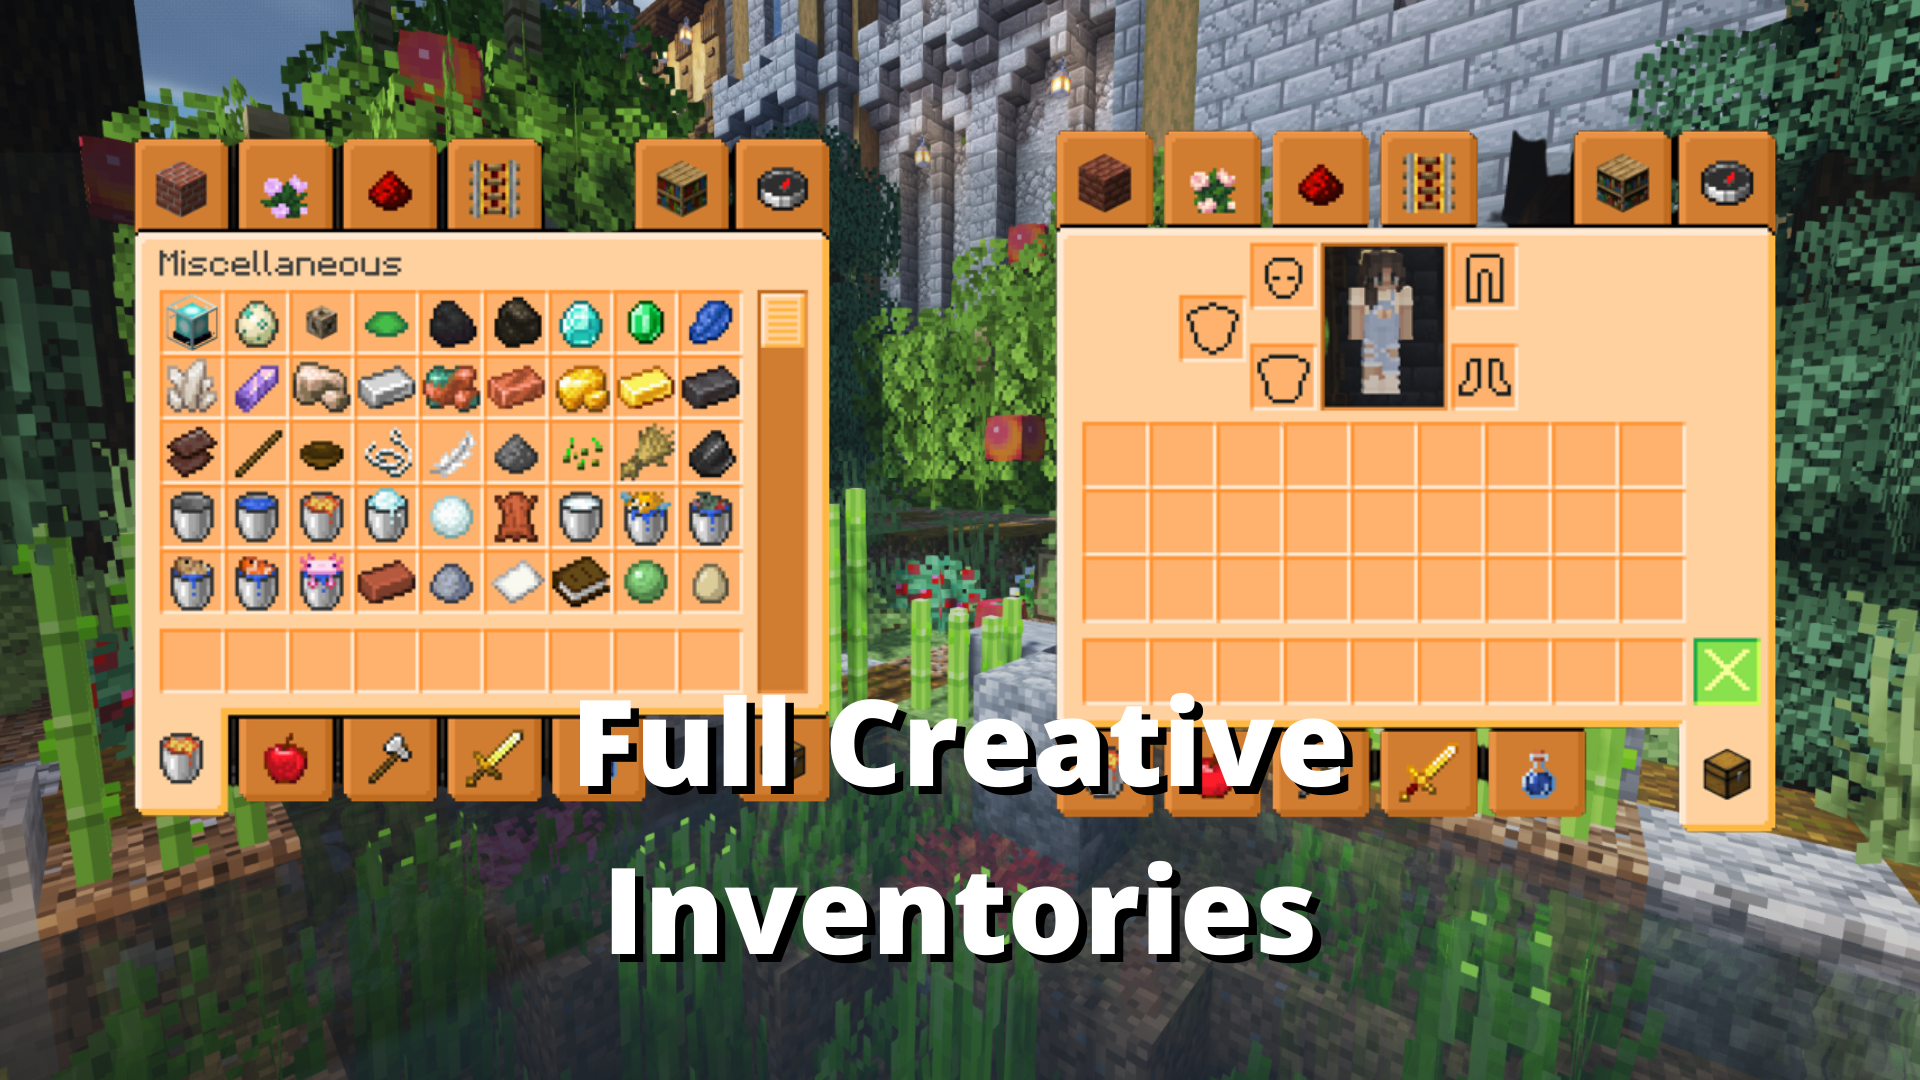 Full creative inventory.